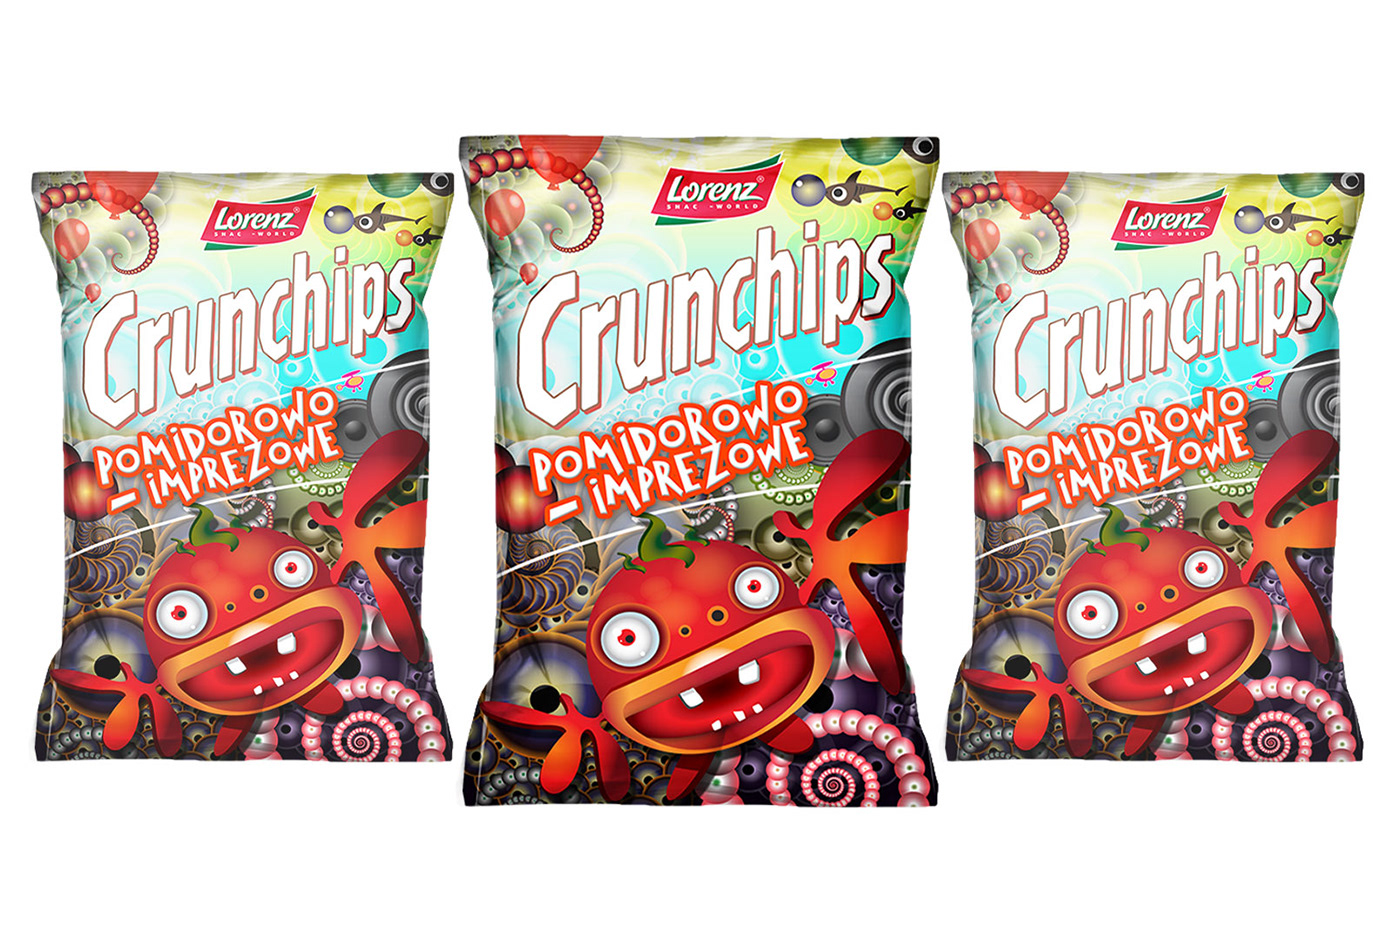 Crunchips packaging design projektowanie opakowań